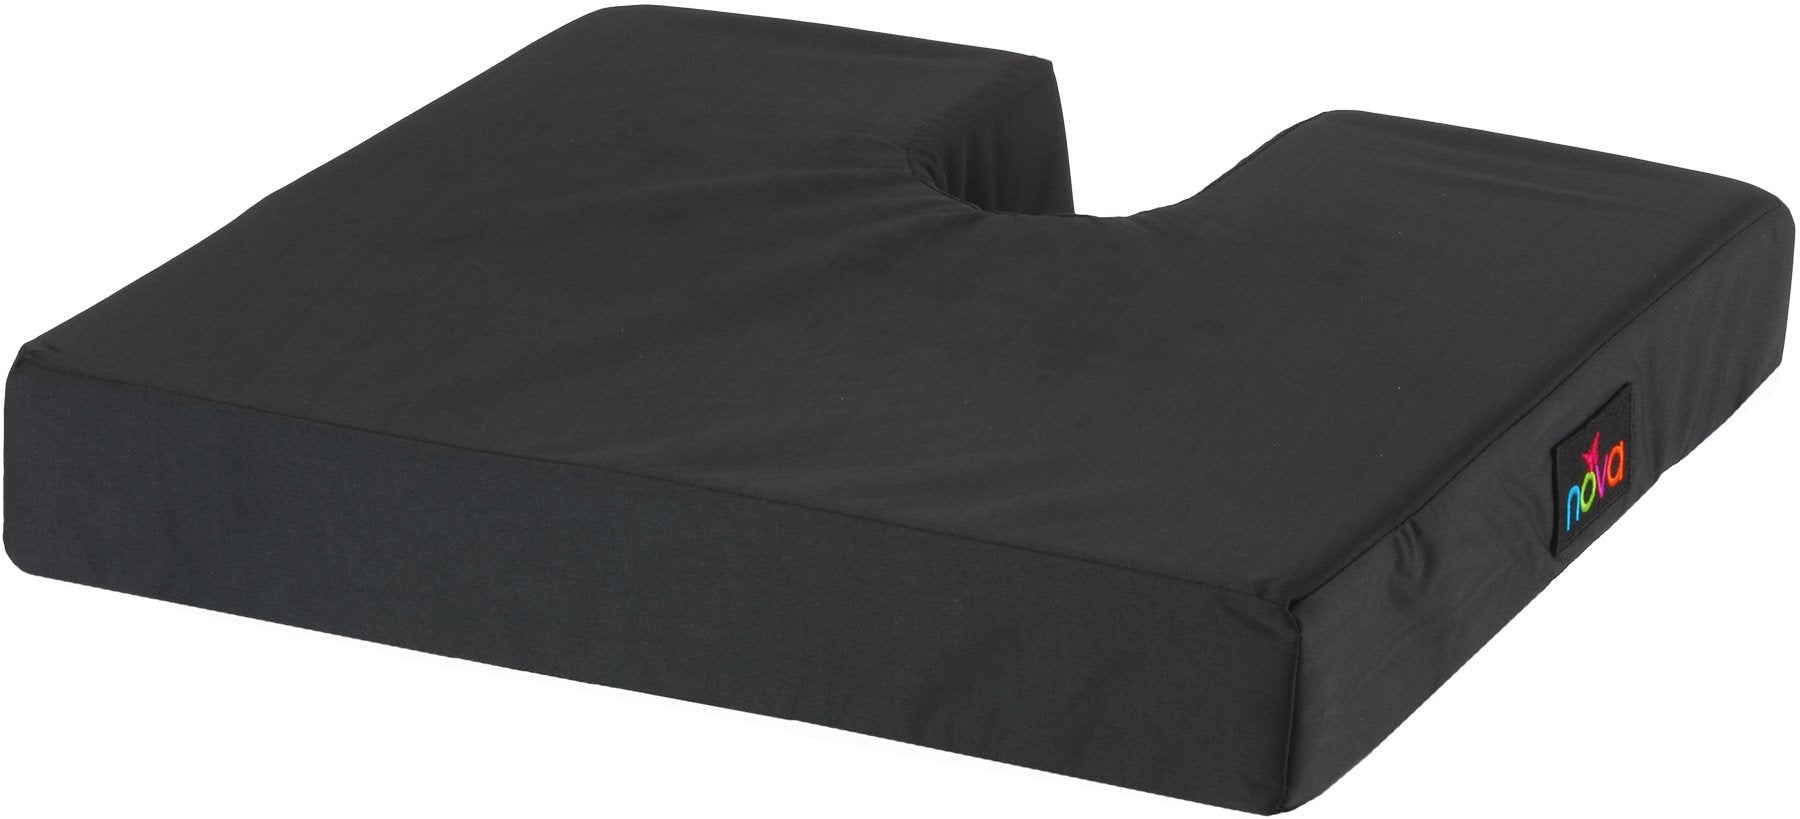 NOVA Coccyx Seat & Wheelchair Cushion, High Density Foam Cushion with Removable Cover, Tailbone & Spine Cut Out Cushion